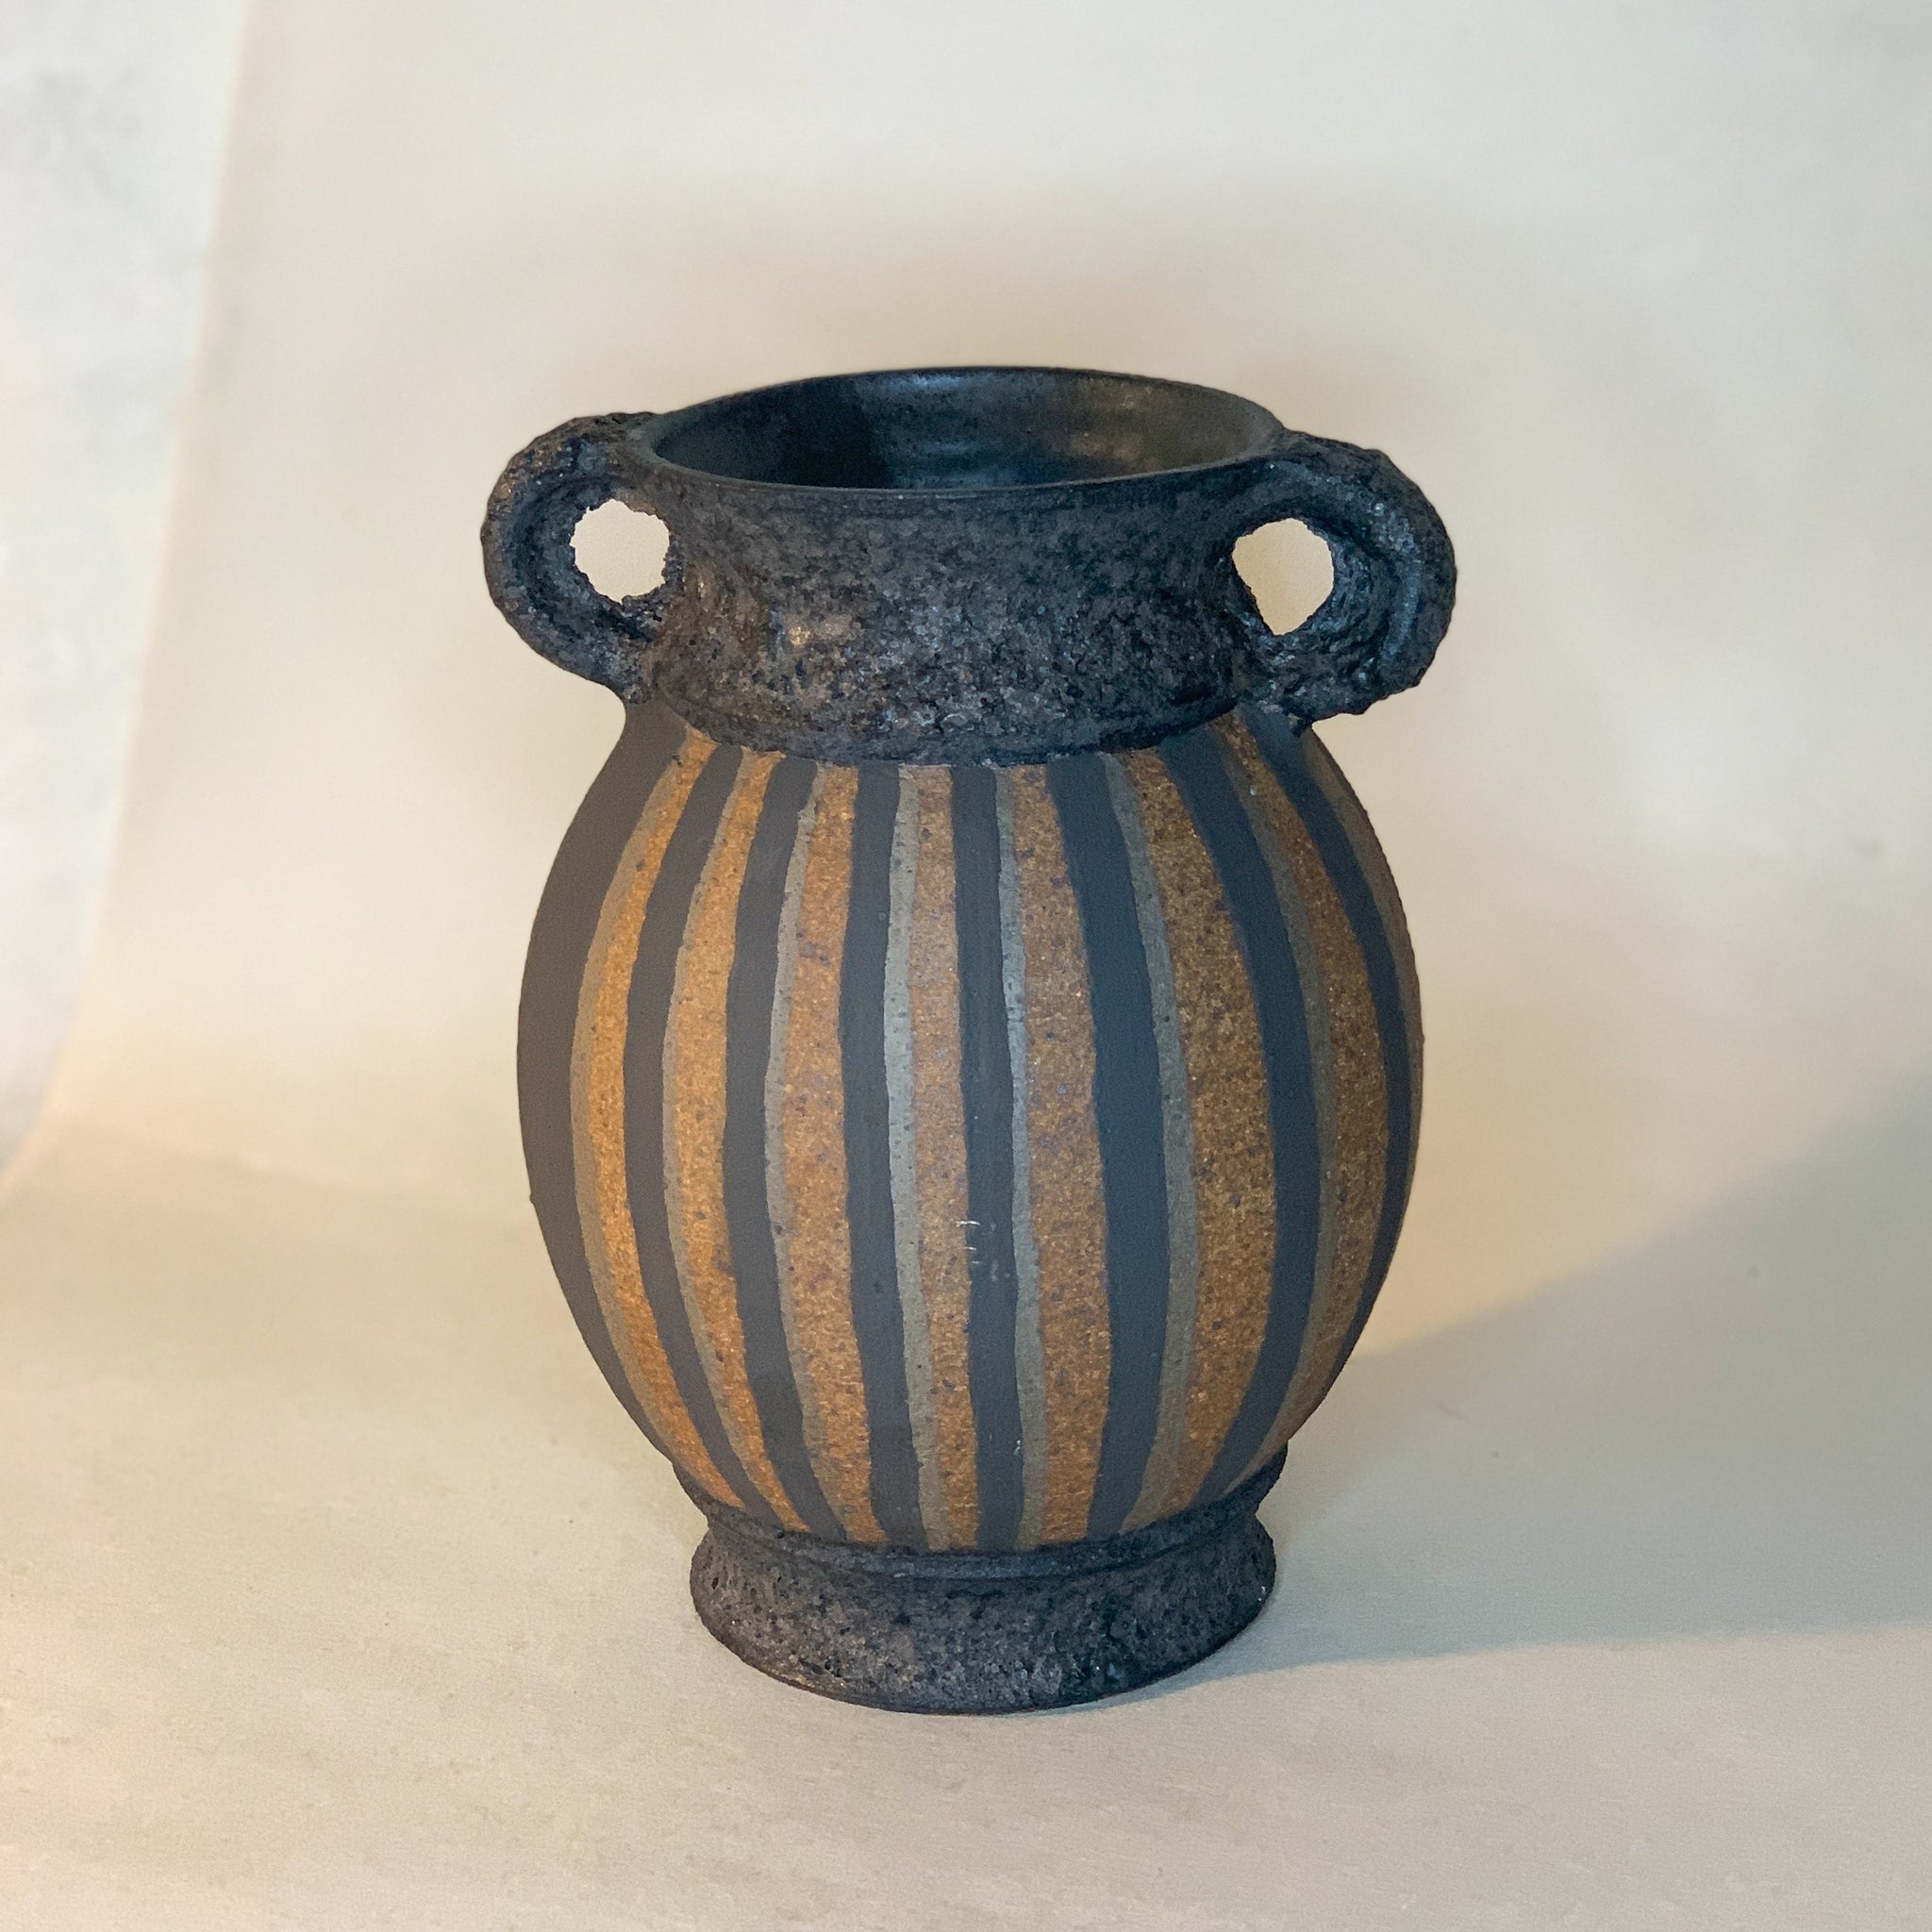 painted two handled vase. handmade ceramic vase.